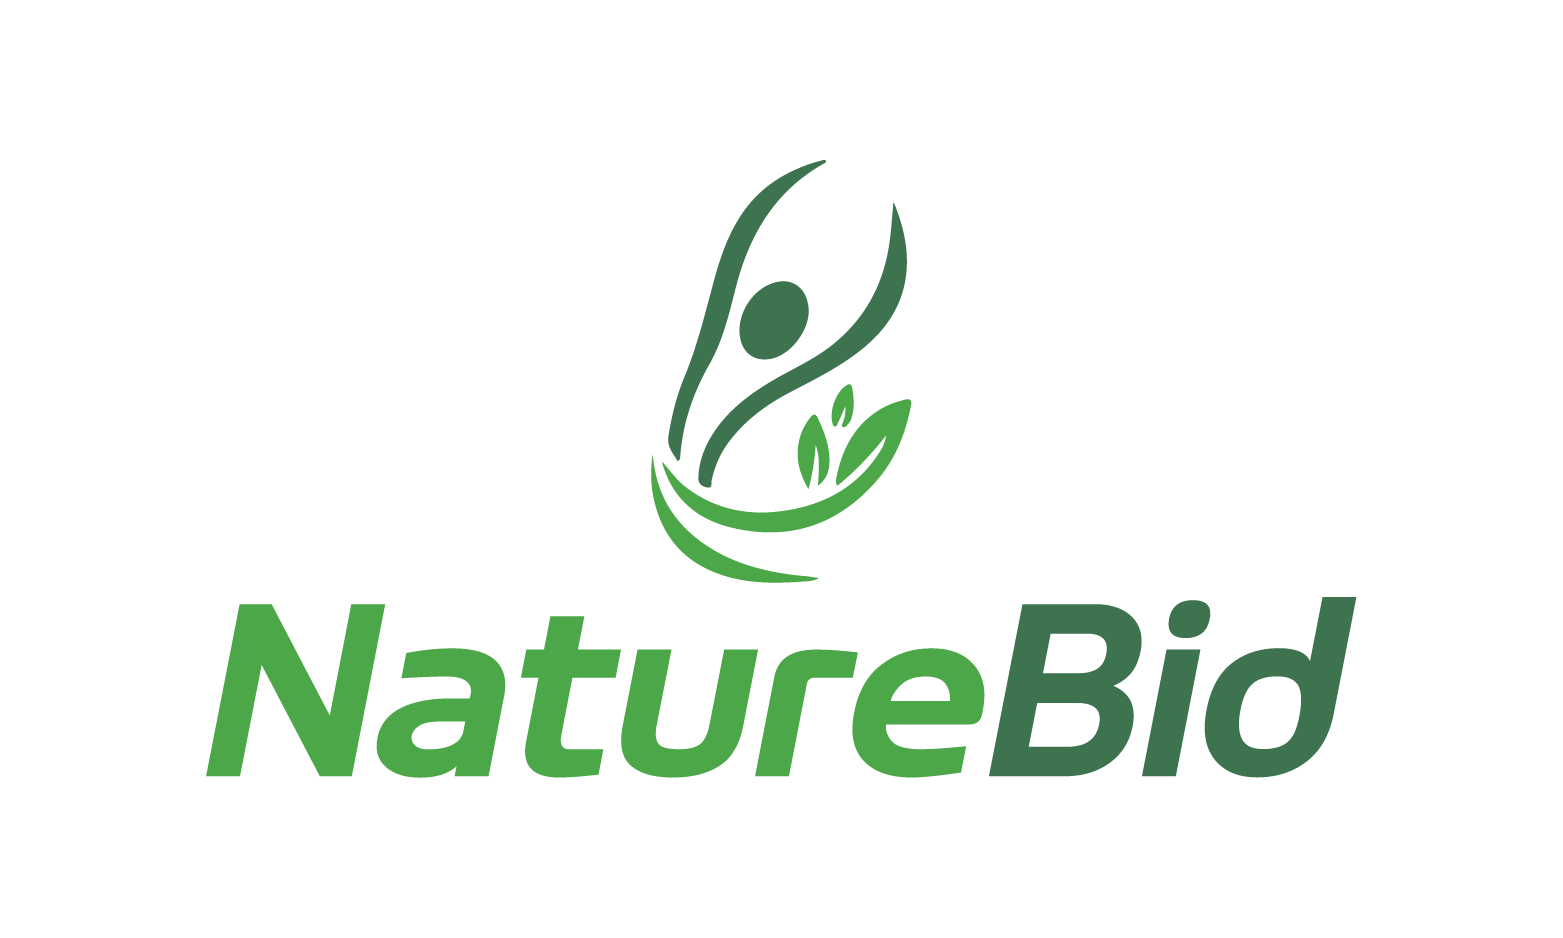 NatureBid.com - Creative brandable domain for sale